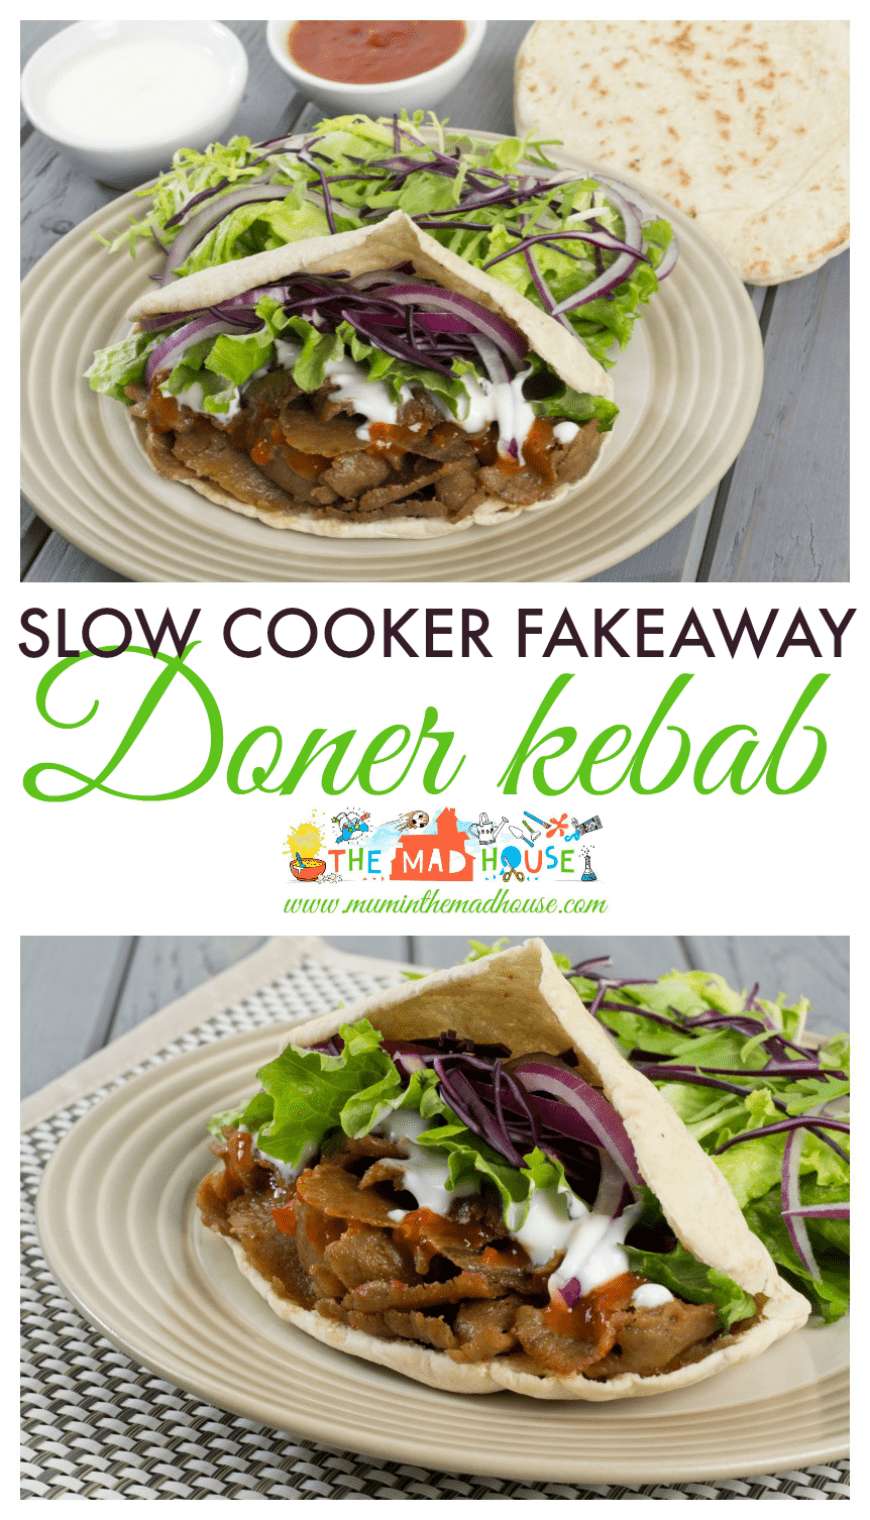 Fakeaway slow cooker doner kebab